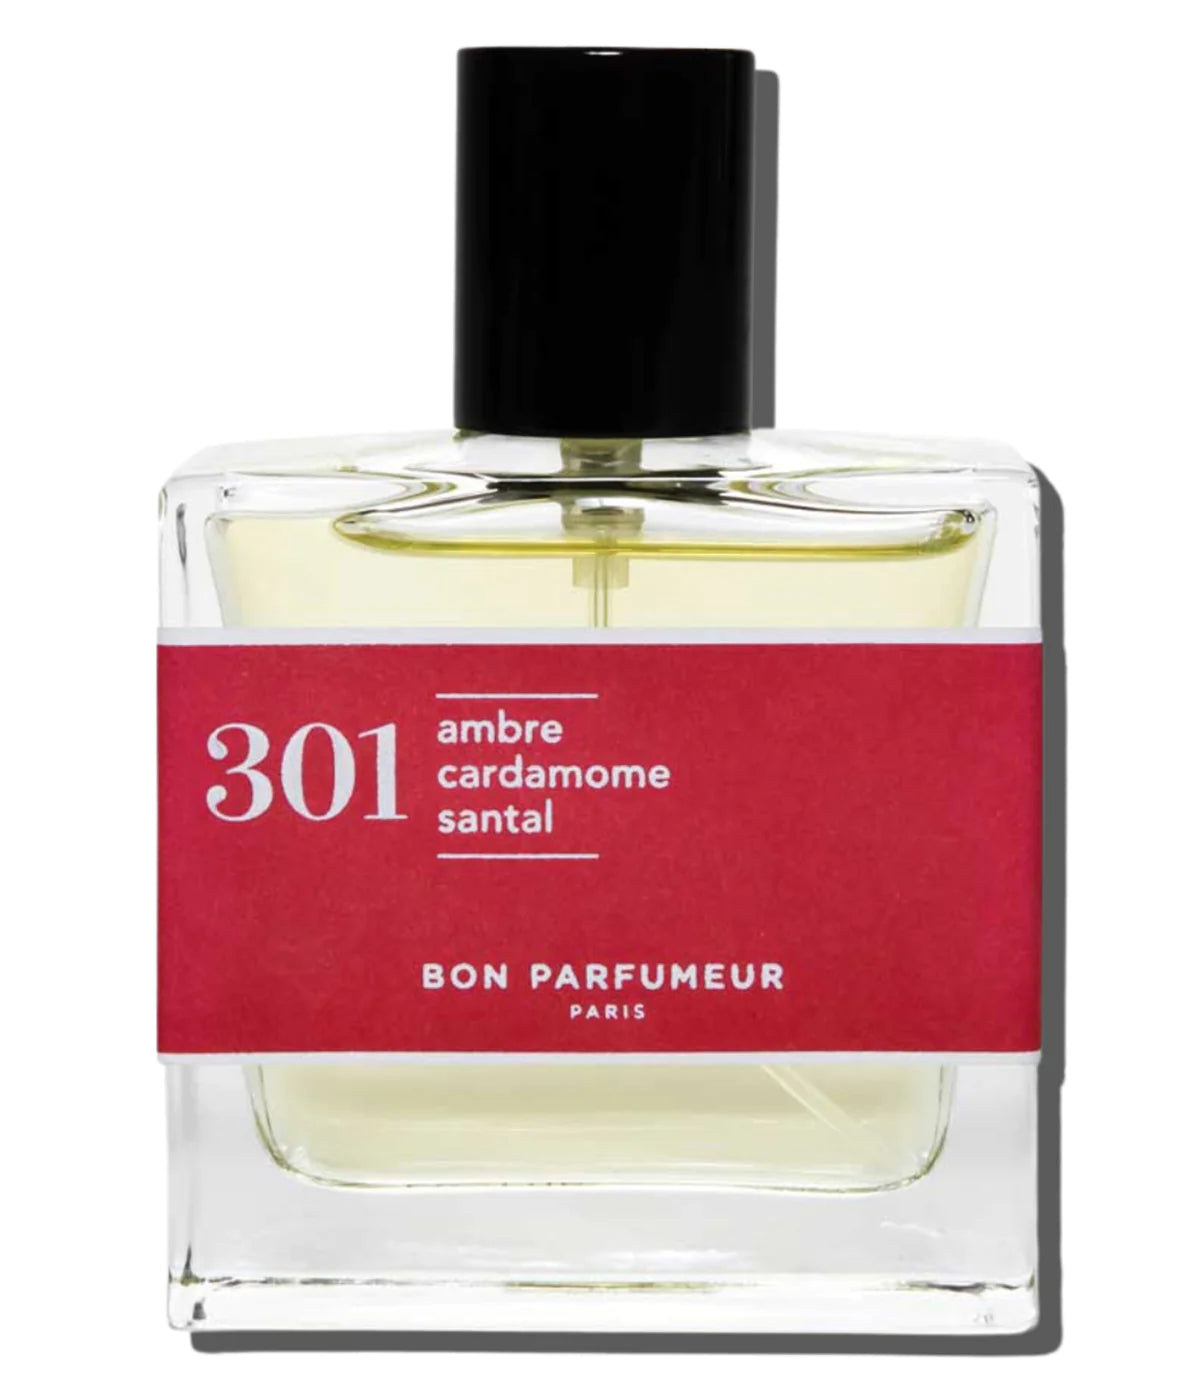 Bon Parfumeur, 301, Amber, Spices, Sandalwood, Amber, Cardamom